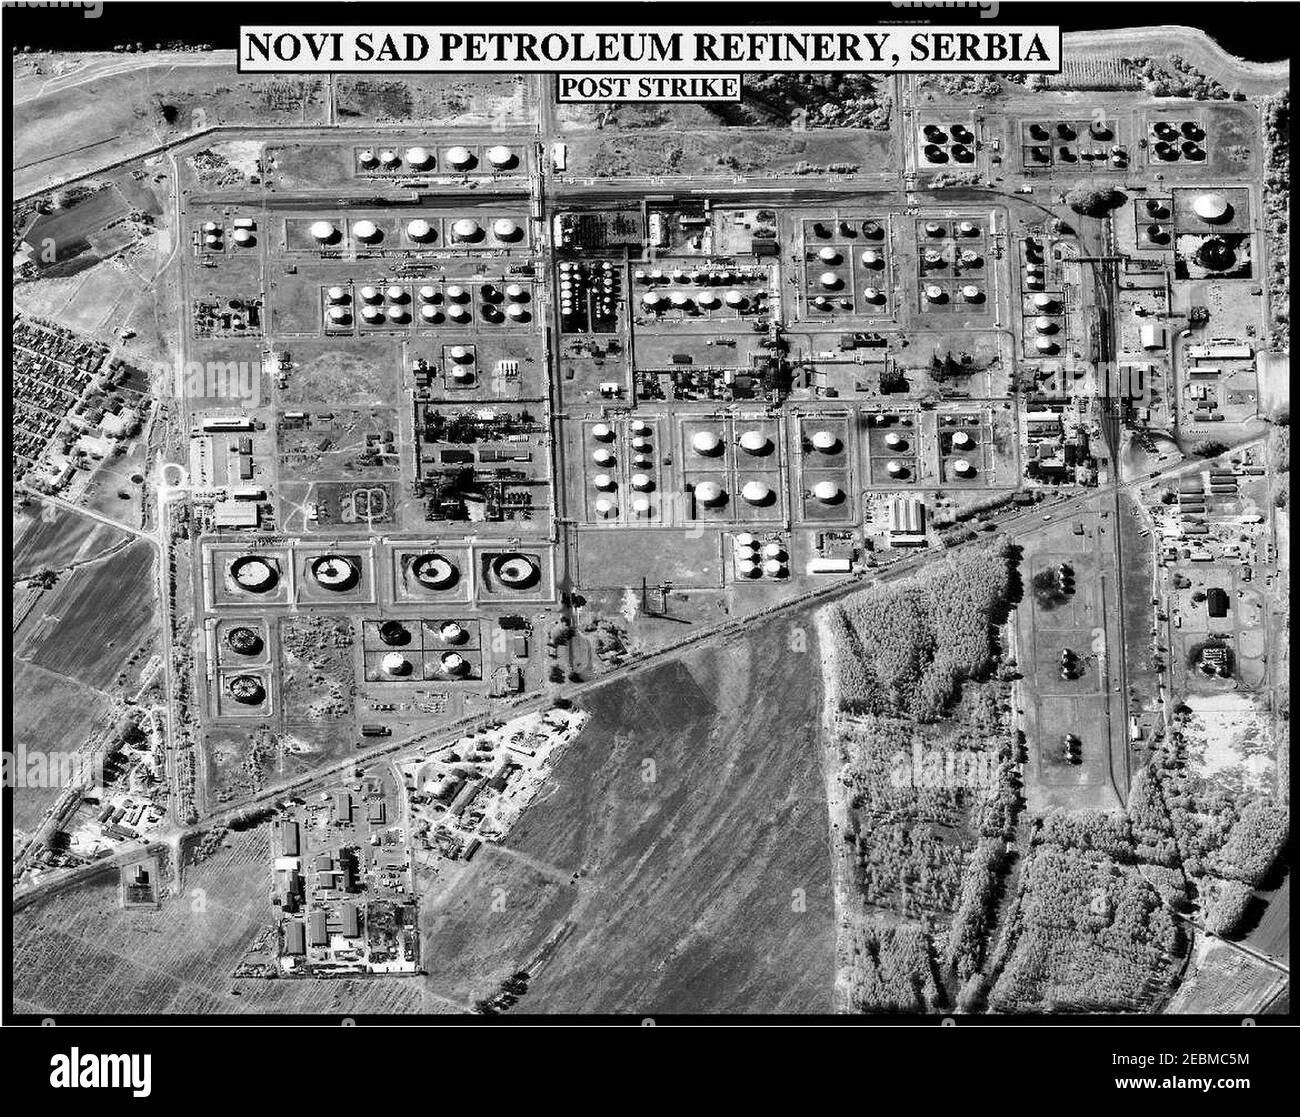 Novi Sad Petroleum Refinery Serbia 1999 Kosovo War. Stock Photo